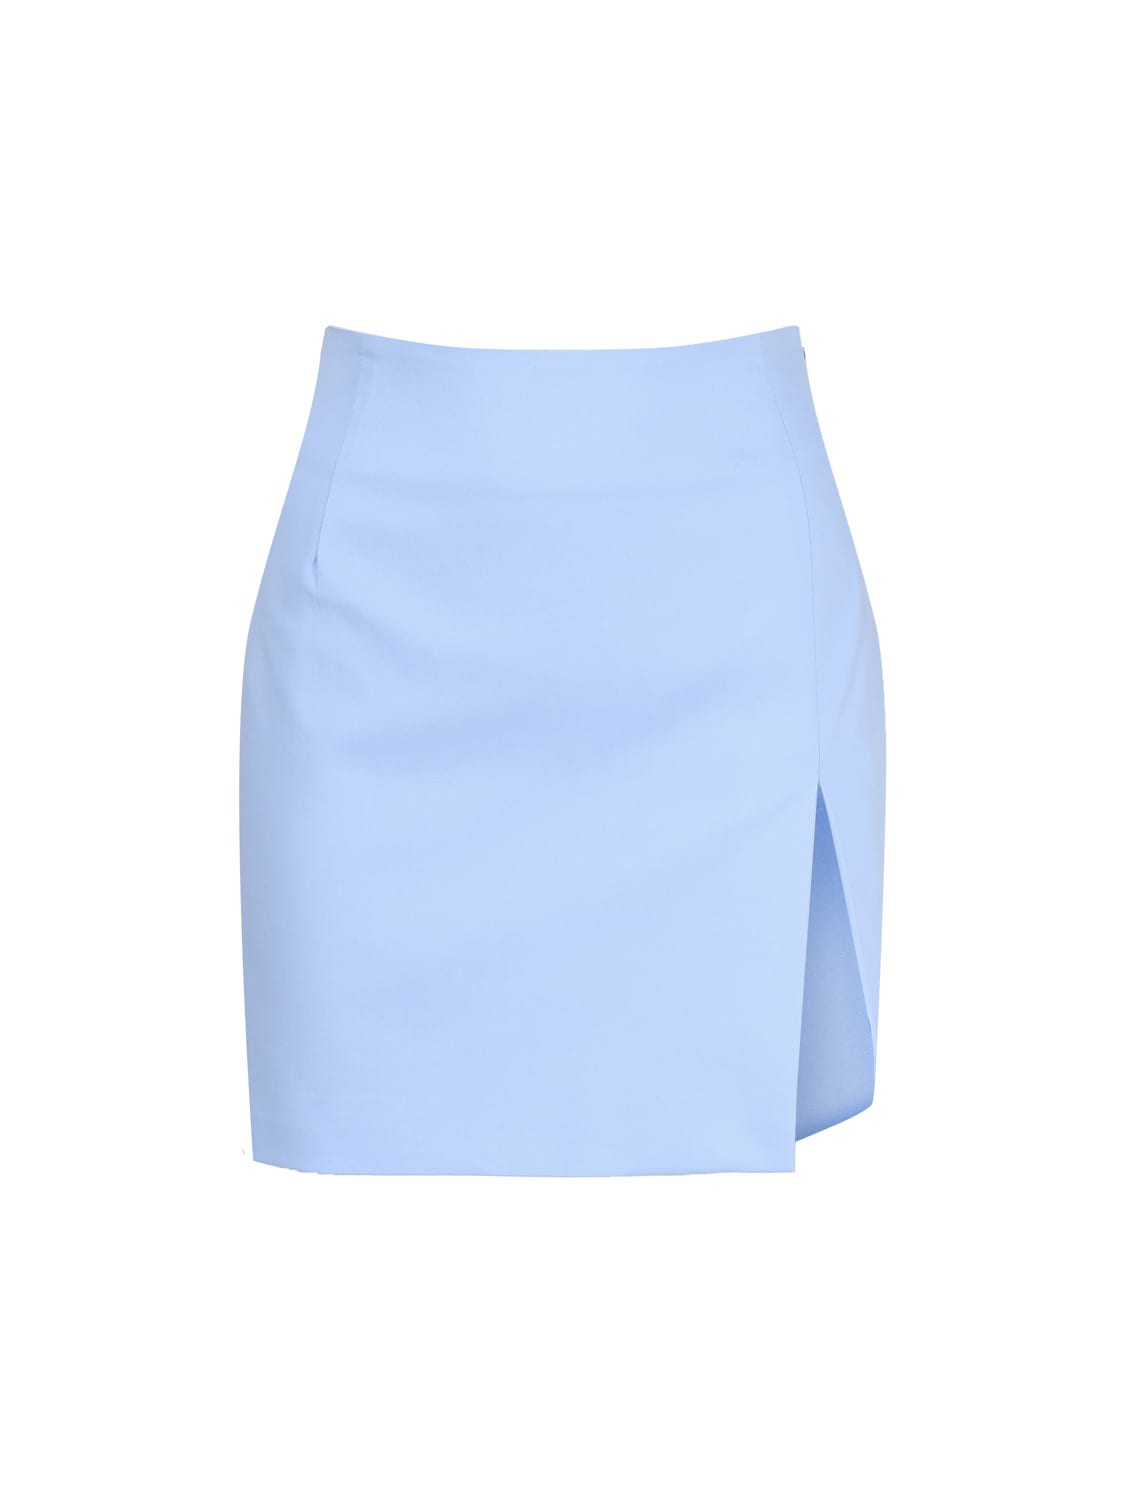 Gioia Miniskirt With Side Slit